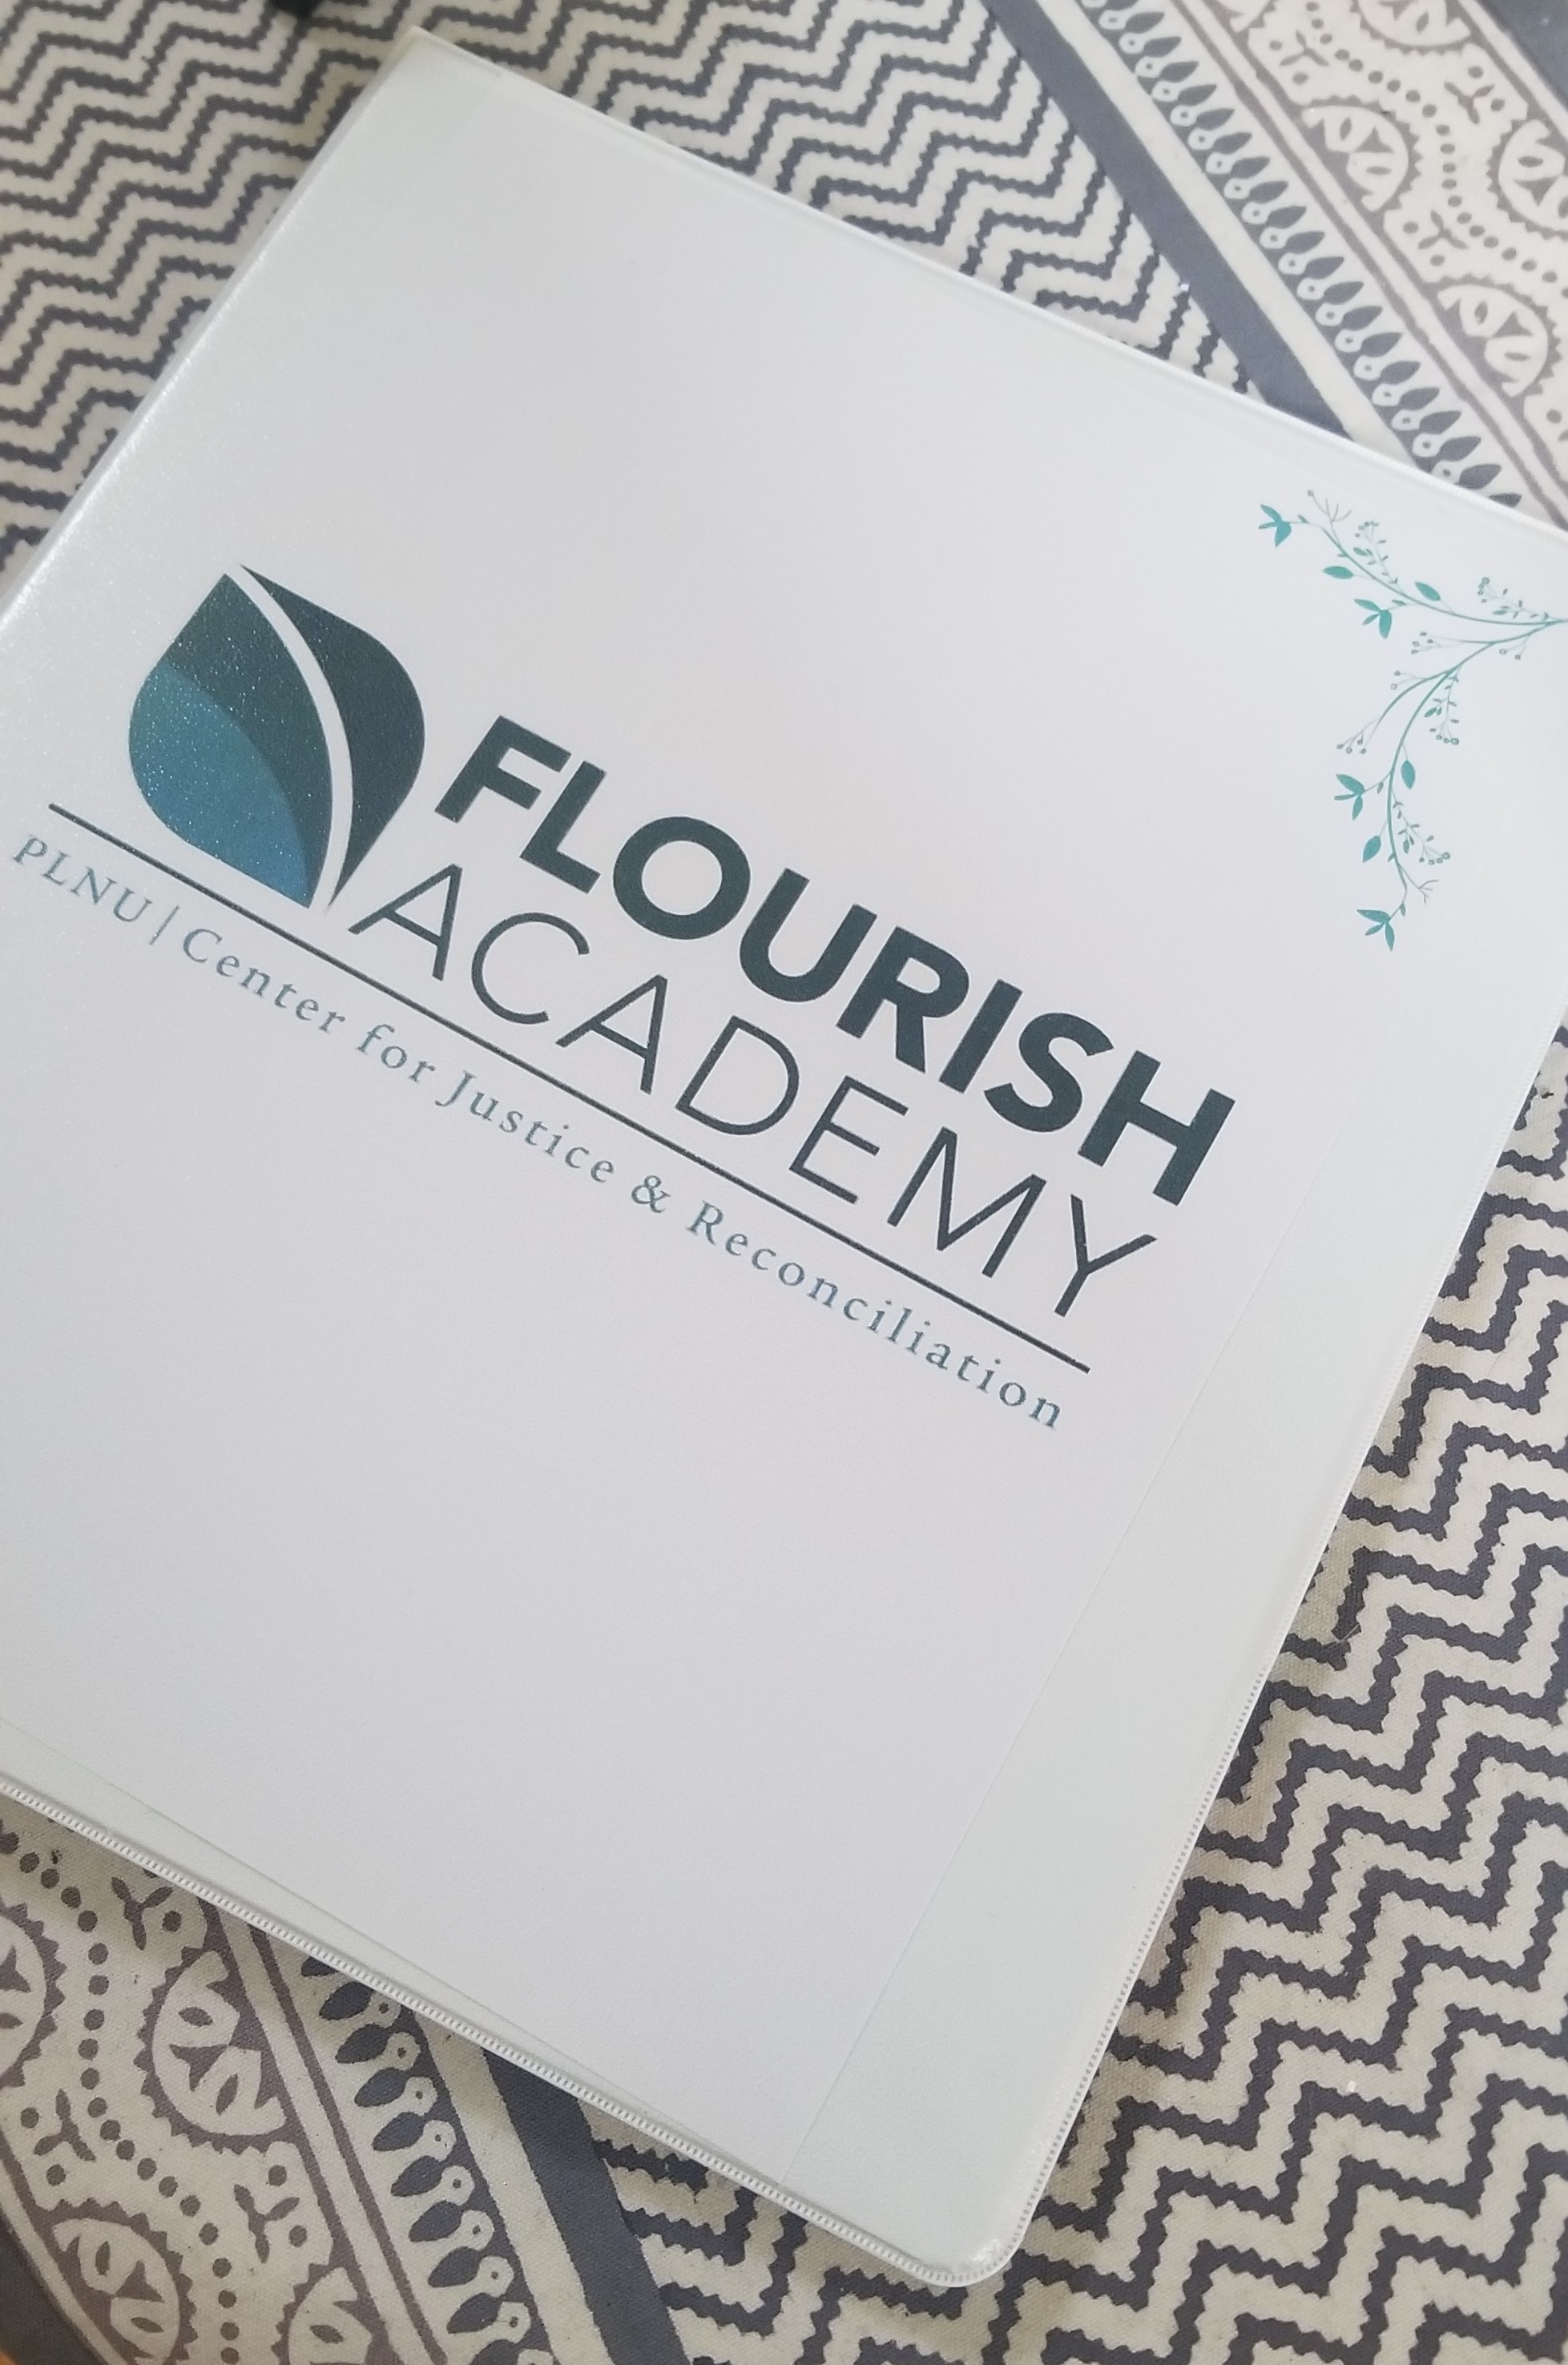 Flourish Academy binders